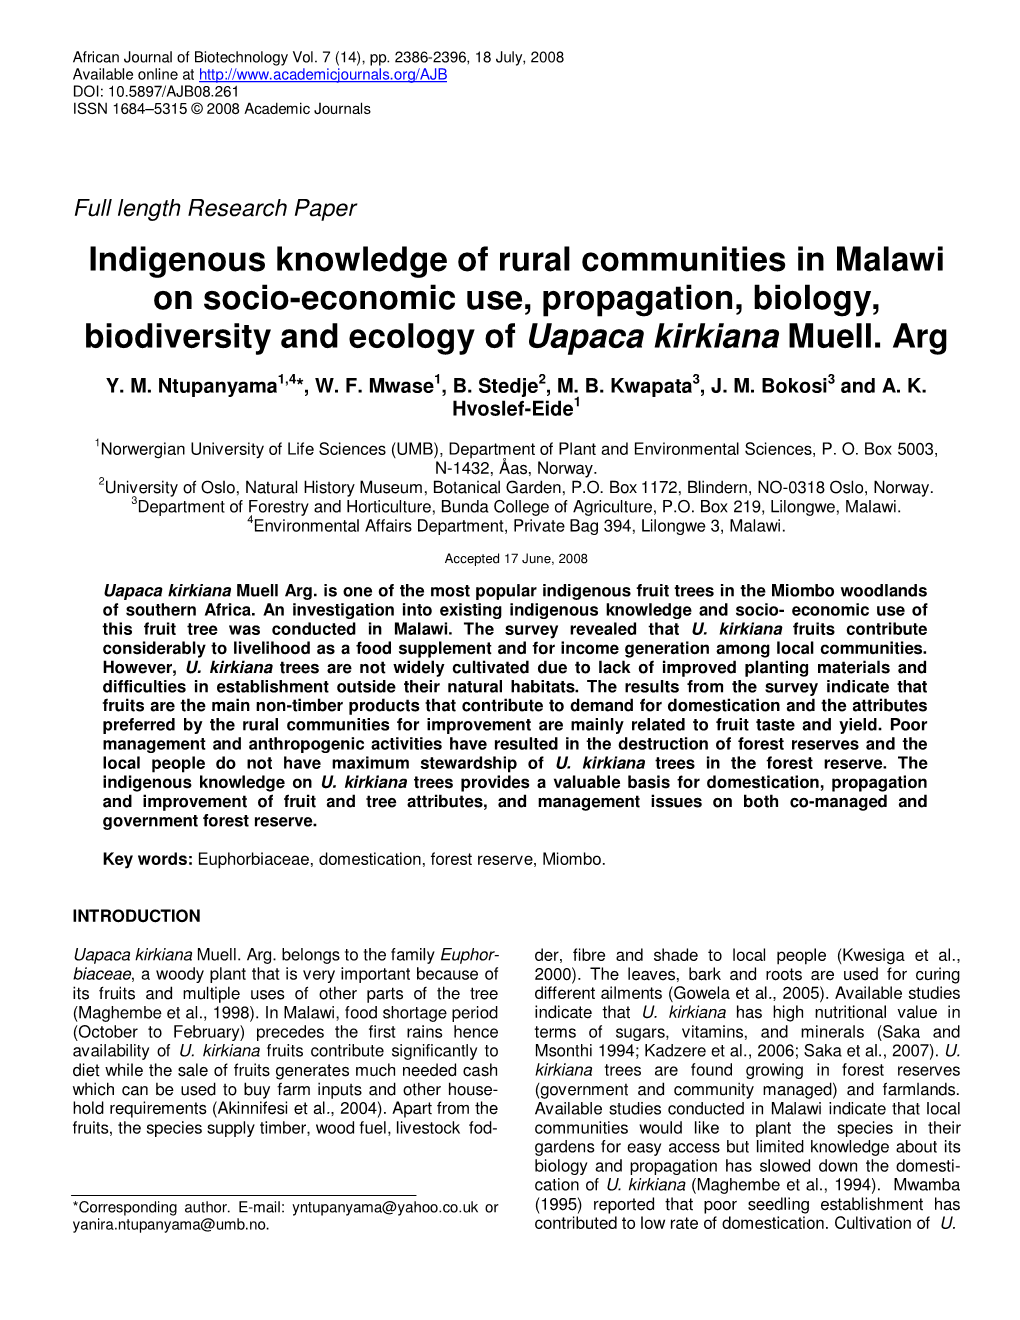 Indigenous Knowledge of Rural Communities in Malawi on Socio-Economic Use, Propagation, Biology, Biodiversity and Ecology of Uapaca Kirkiana Muell